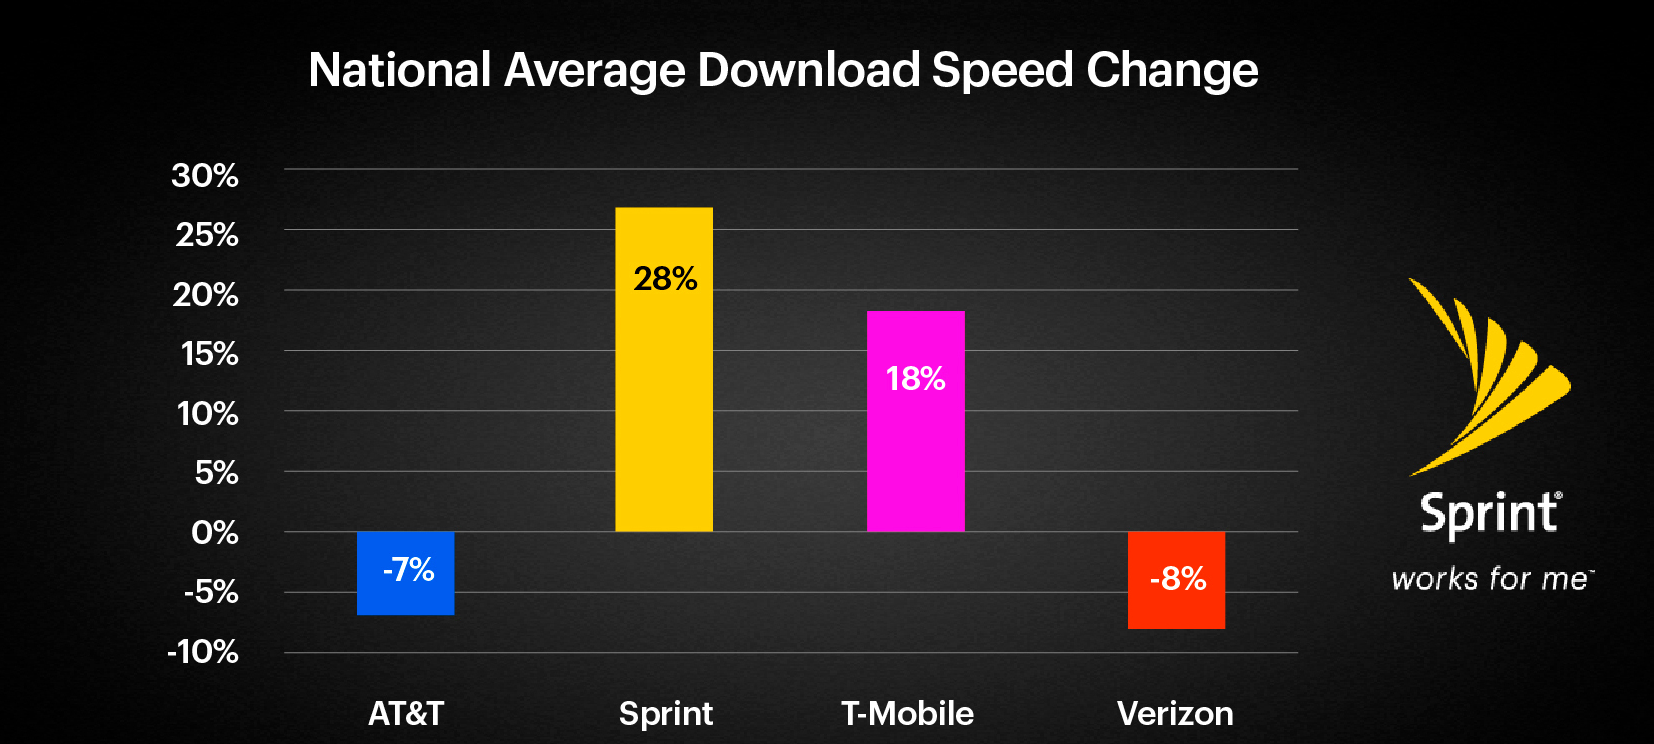 Sprint's LTE Plus download data speed has risen 28% over the last seven months - Speedtest data shows a rise in Sprint's LTE Plus download speeds over the last 7 months